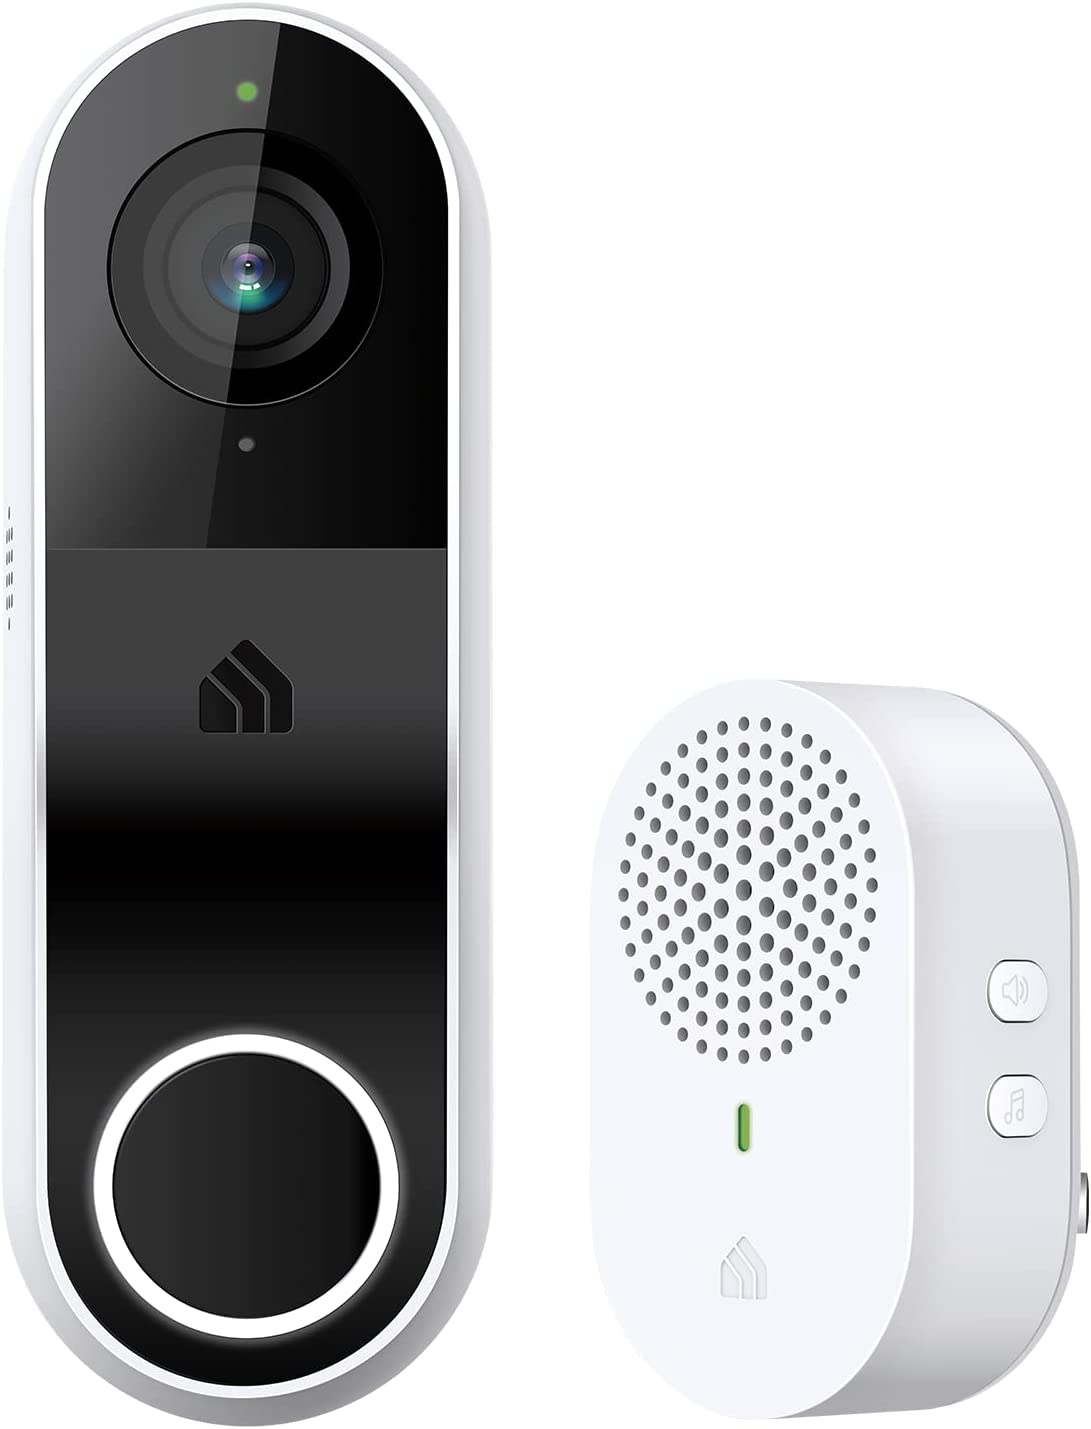 Kasa Smart Video Doorbell Camera – Just $41.99 at Amazon